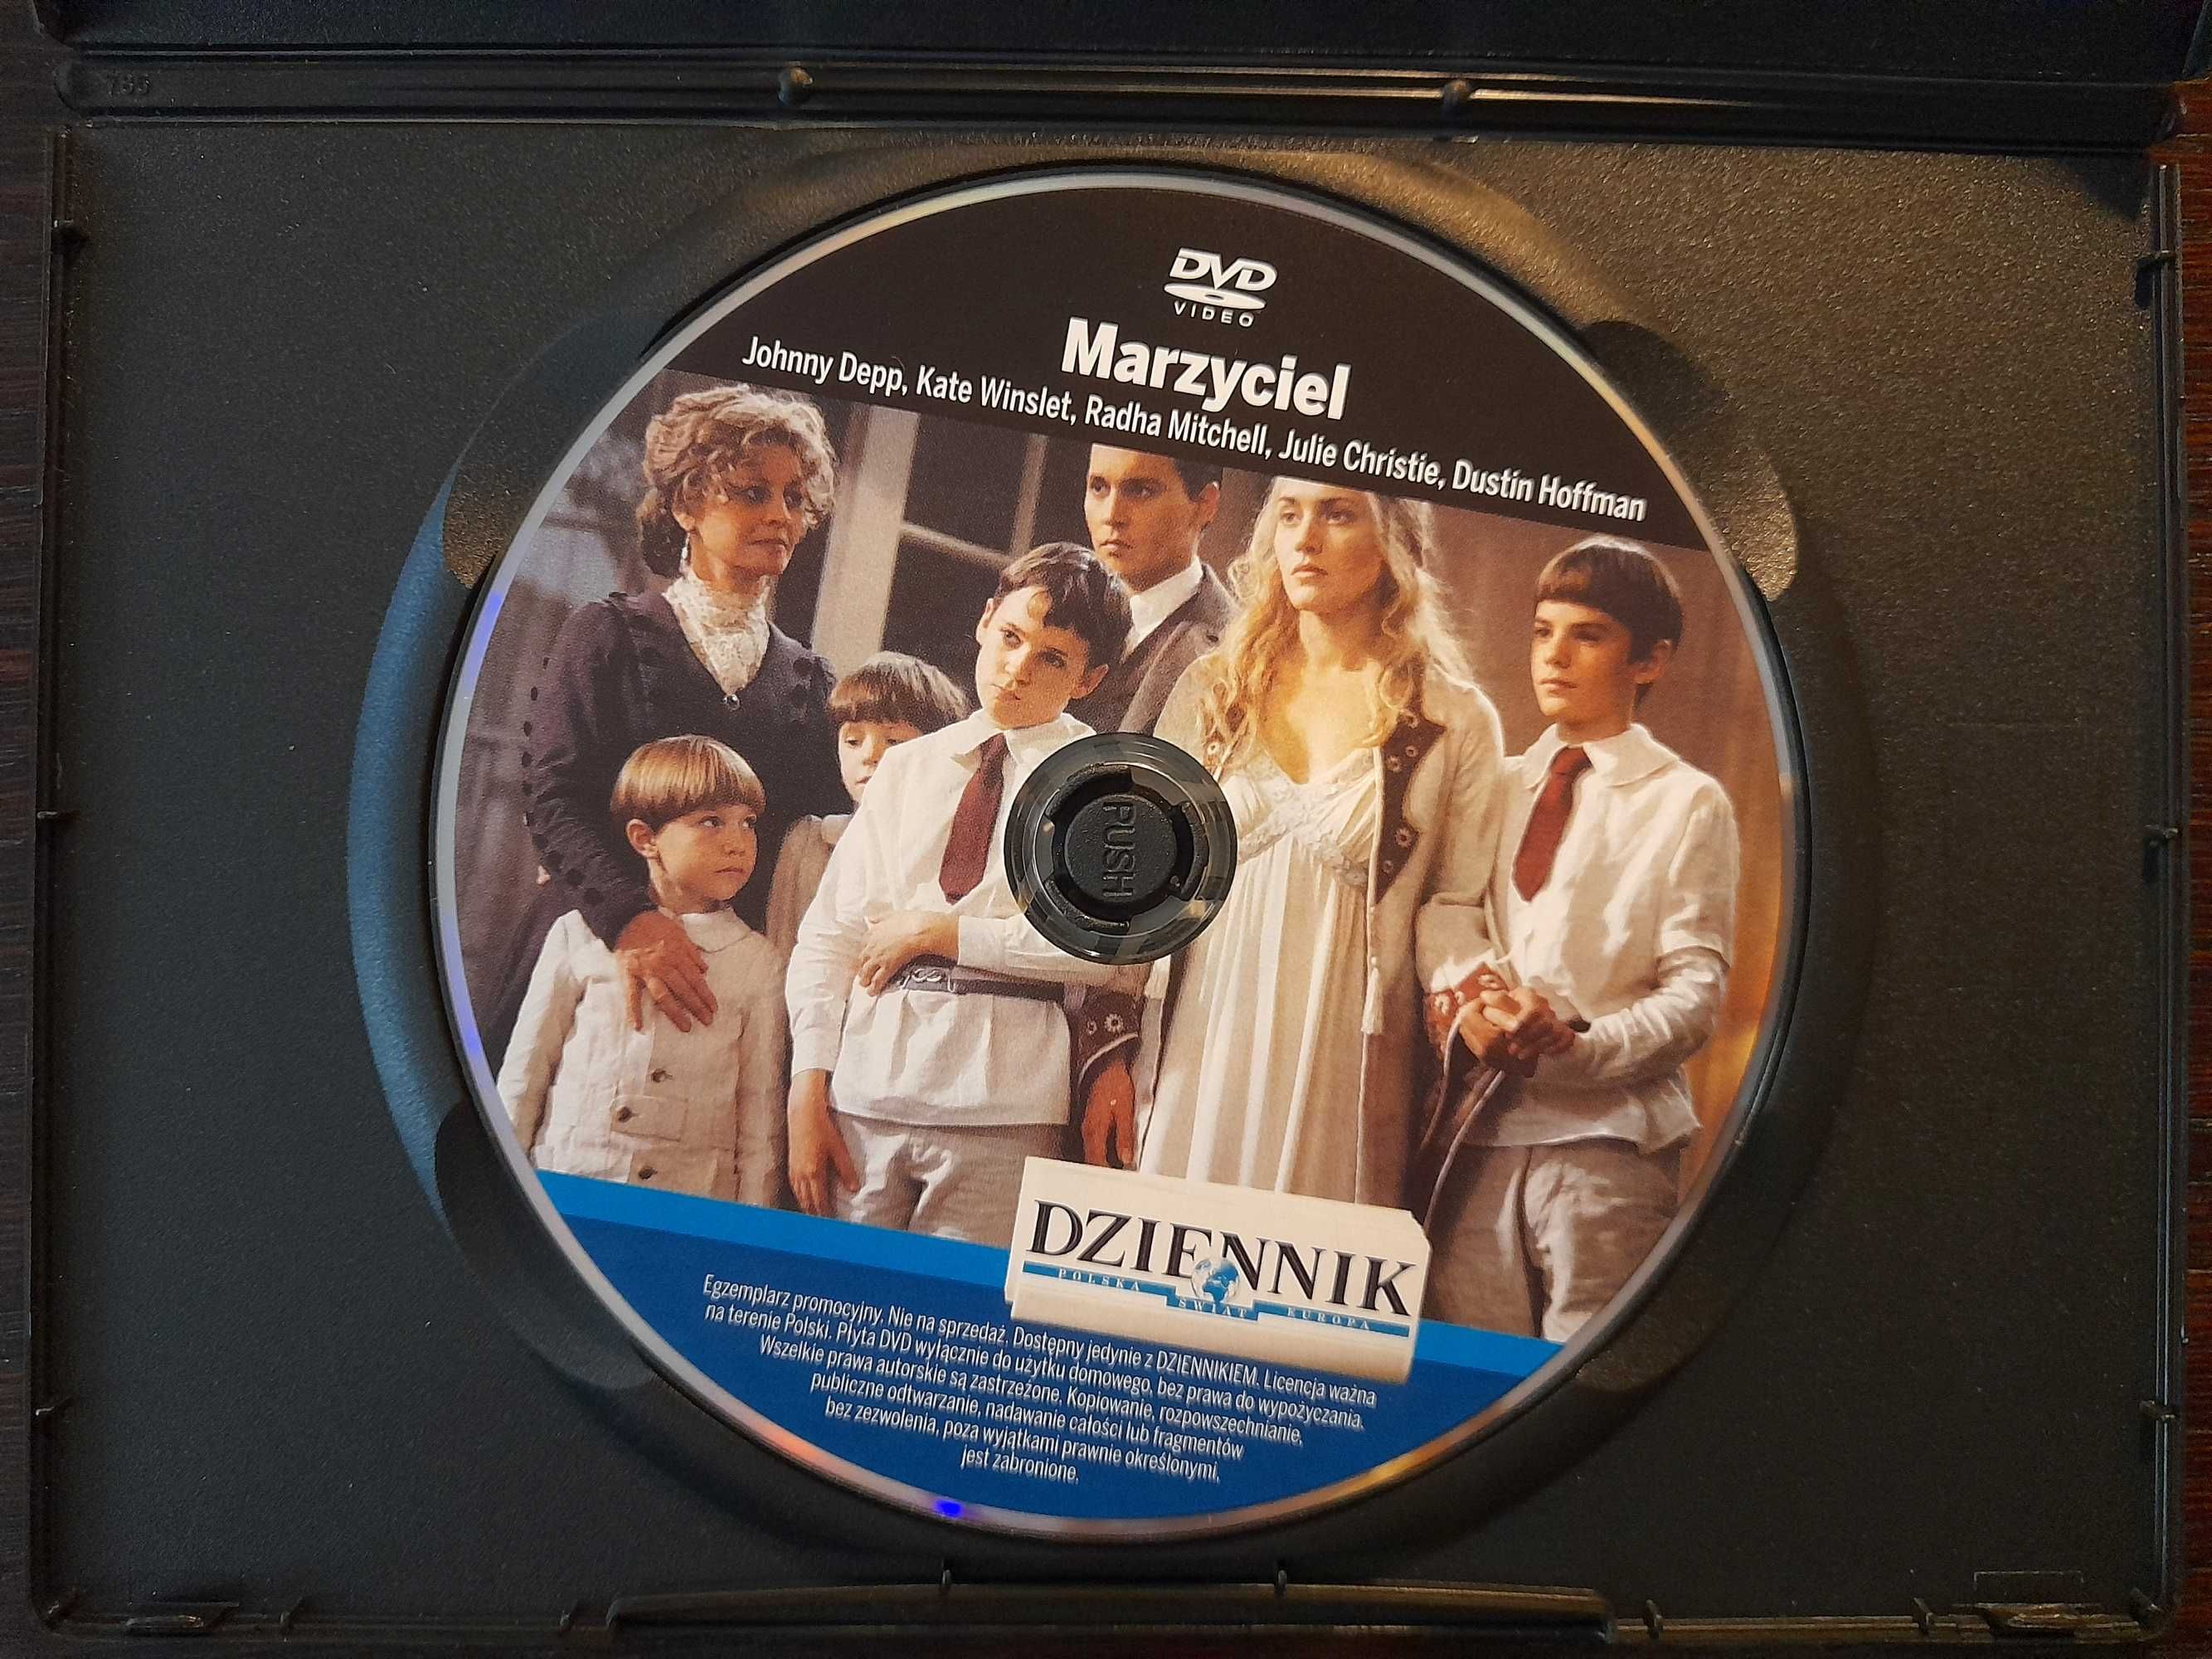 Marzyciel - film DVD - Marc Forster